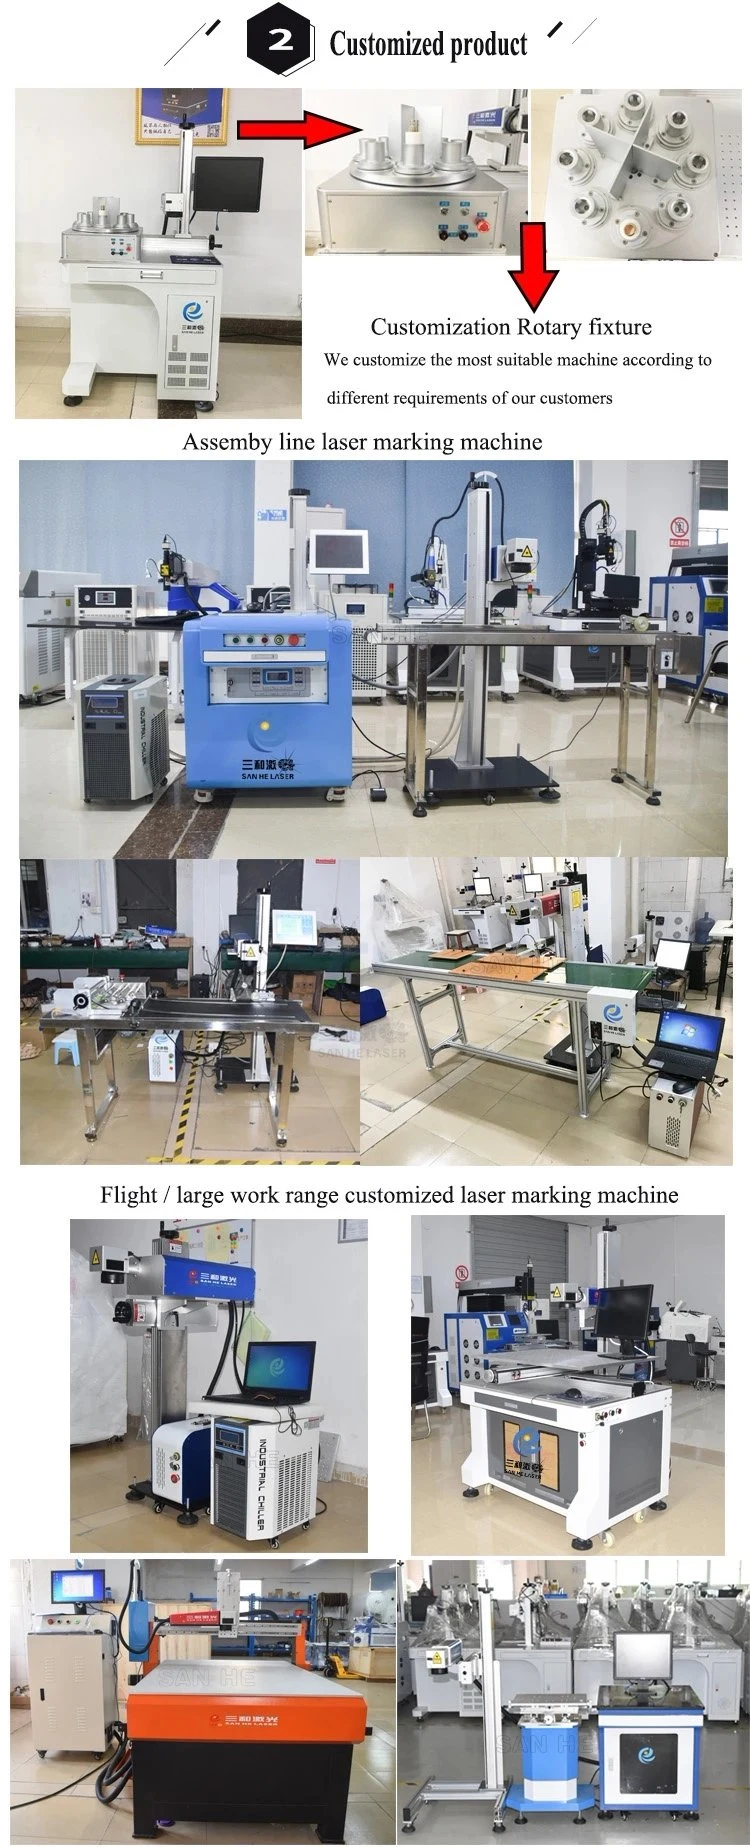 UV Laser Marking machine for Drug Coametic Sapphire Olastic